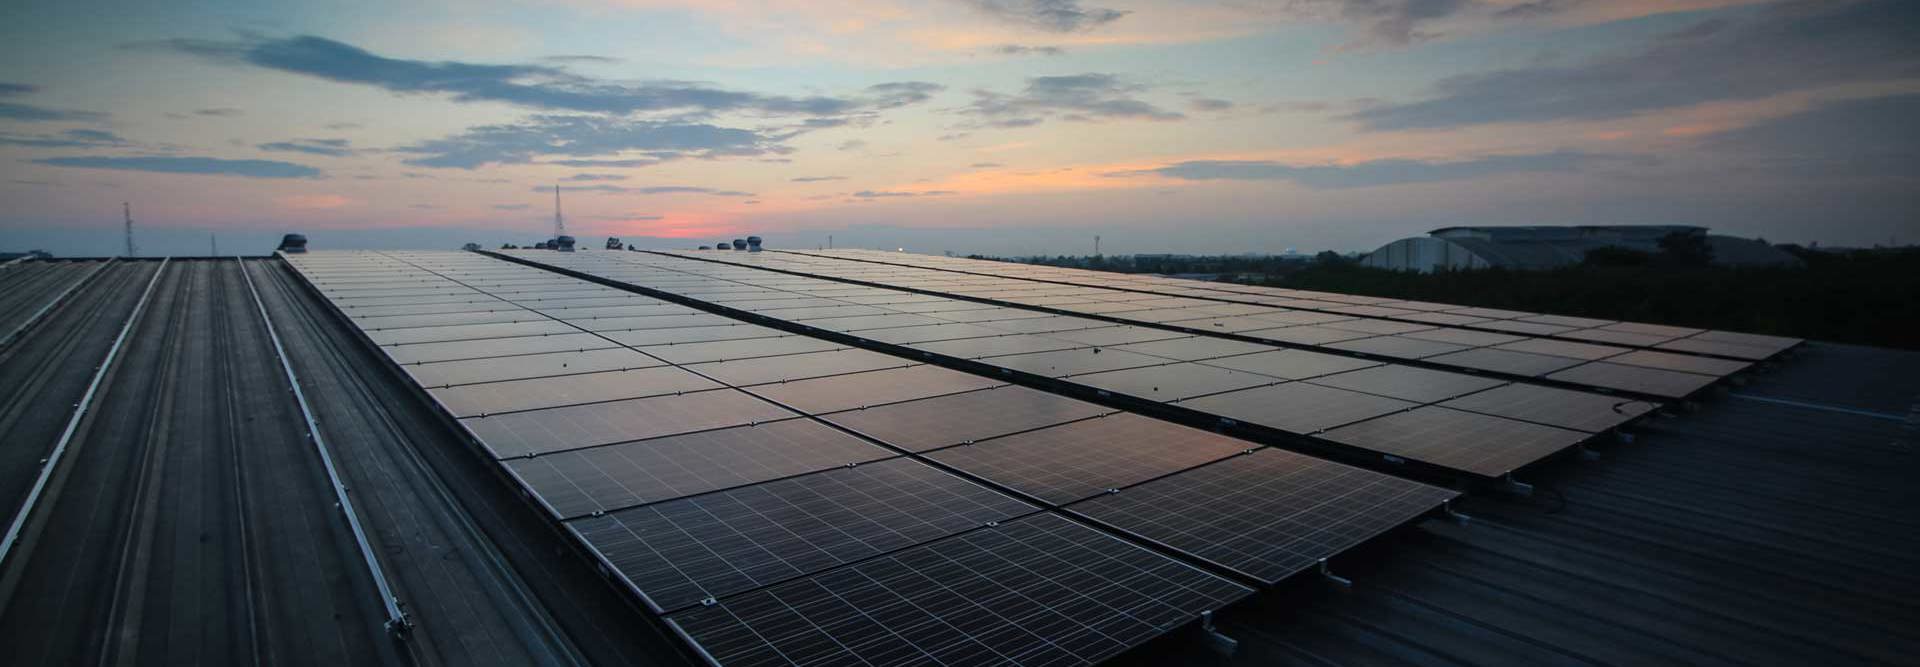 Solarpark Beveiliging Kooi